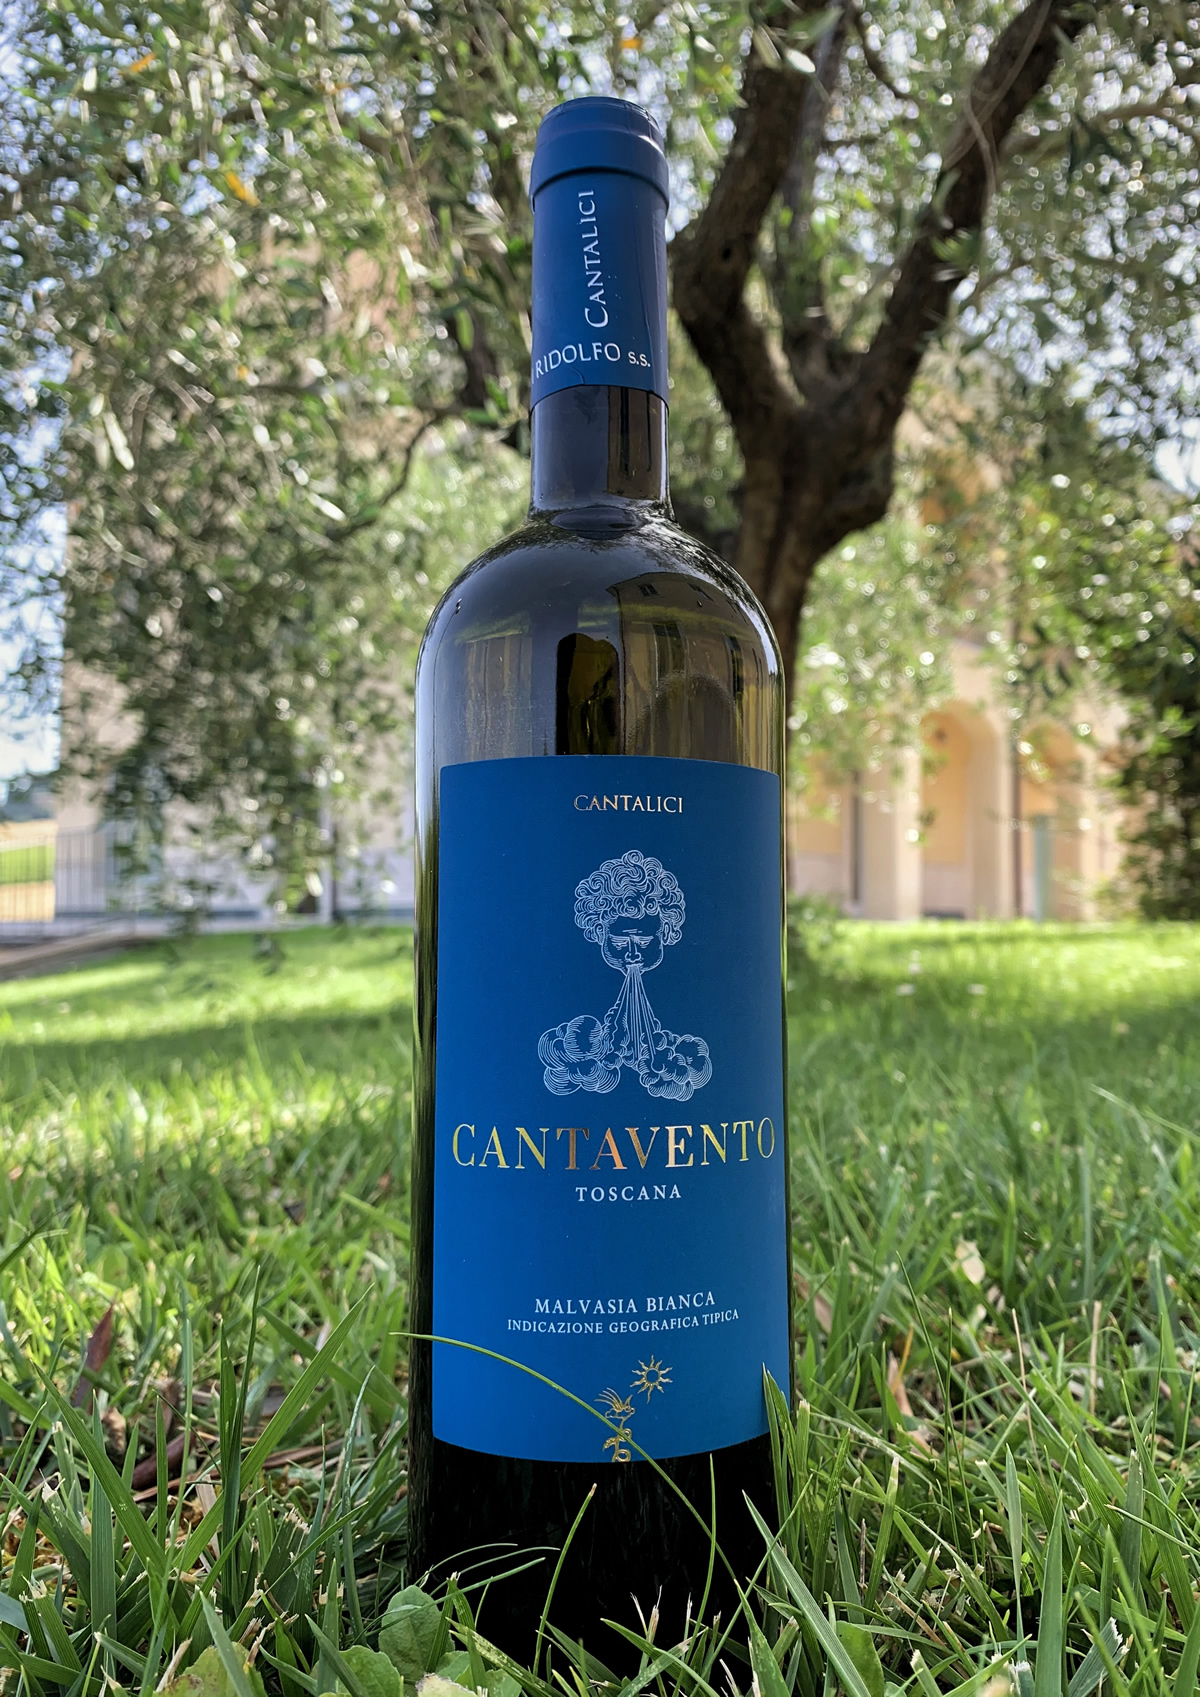 Cantavento Cantalici White Wine Tuscany